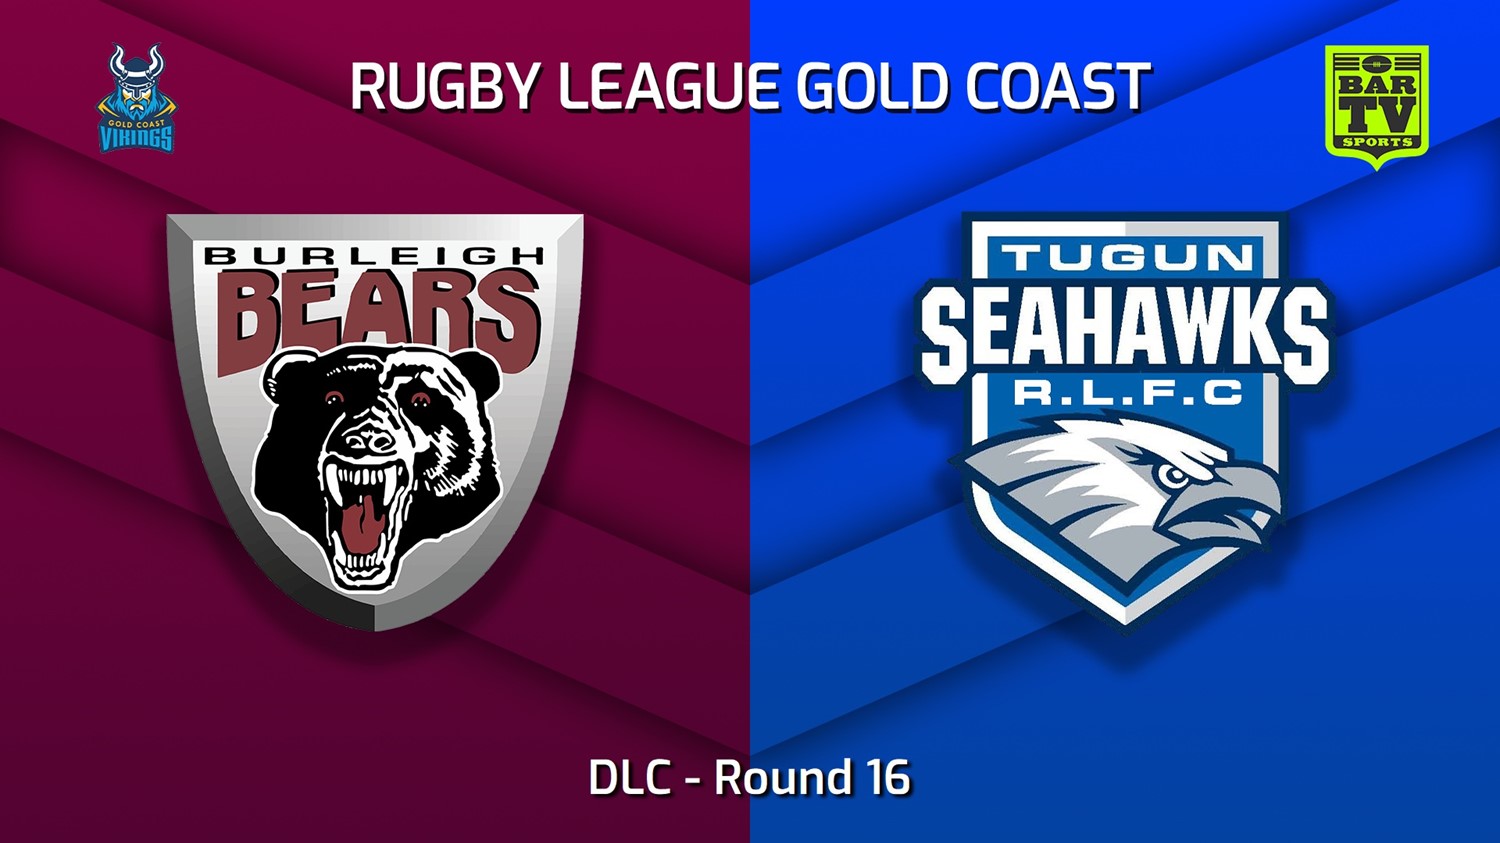 220807-Gold Coast Round 16 - DLC - Burleigh Bears v Tugun Seahawks Slate Image